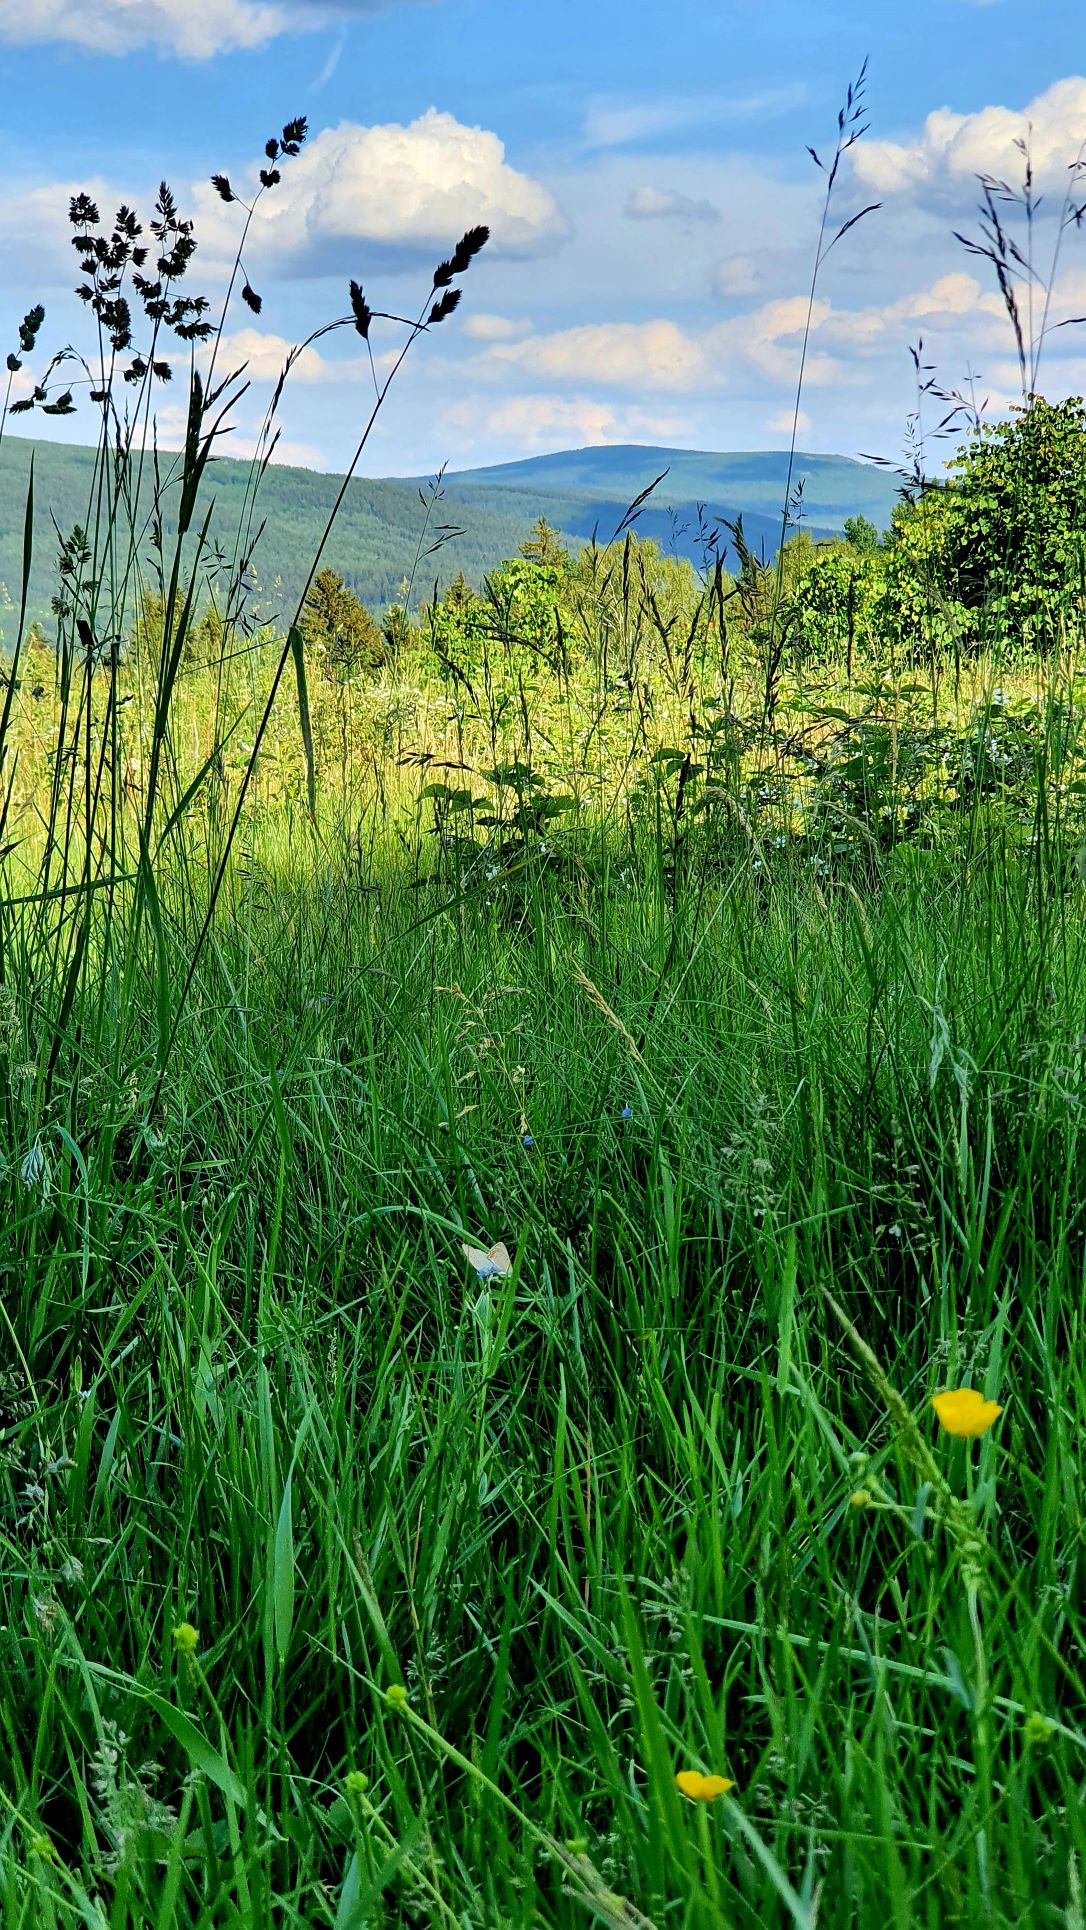 Natur auf dem Berg Czerniawska Kopa. © Natalie Junghof-Preis